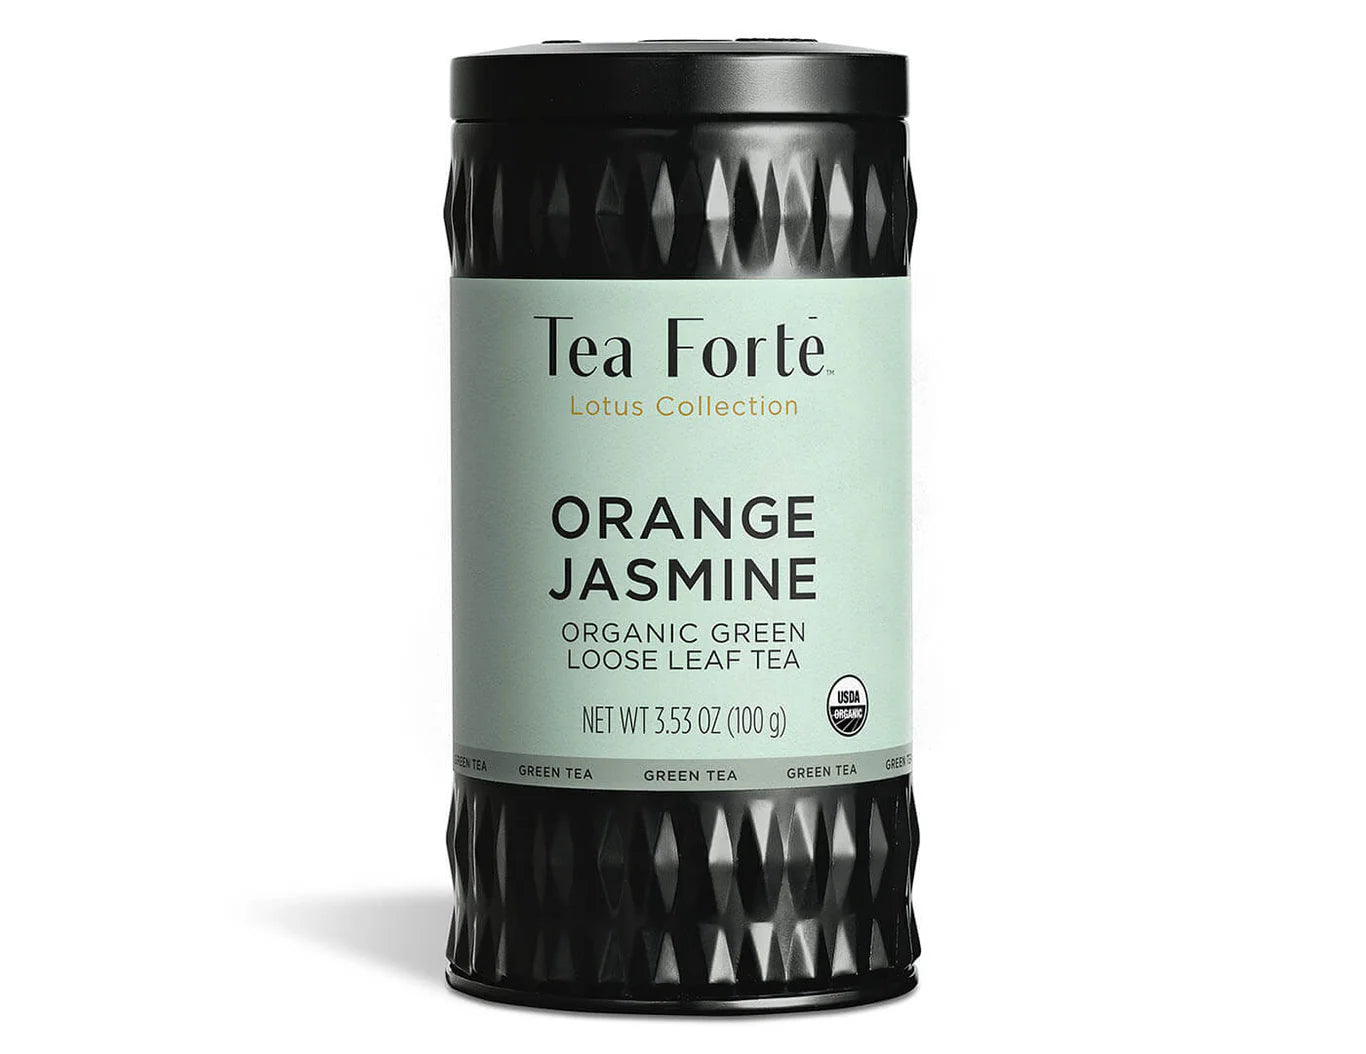 TEA FORTE ORANGE JASMINE